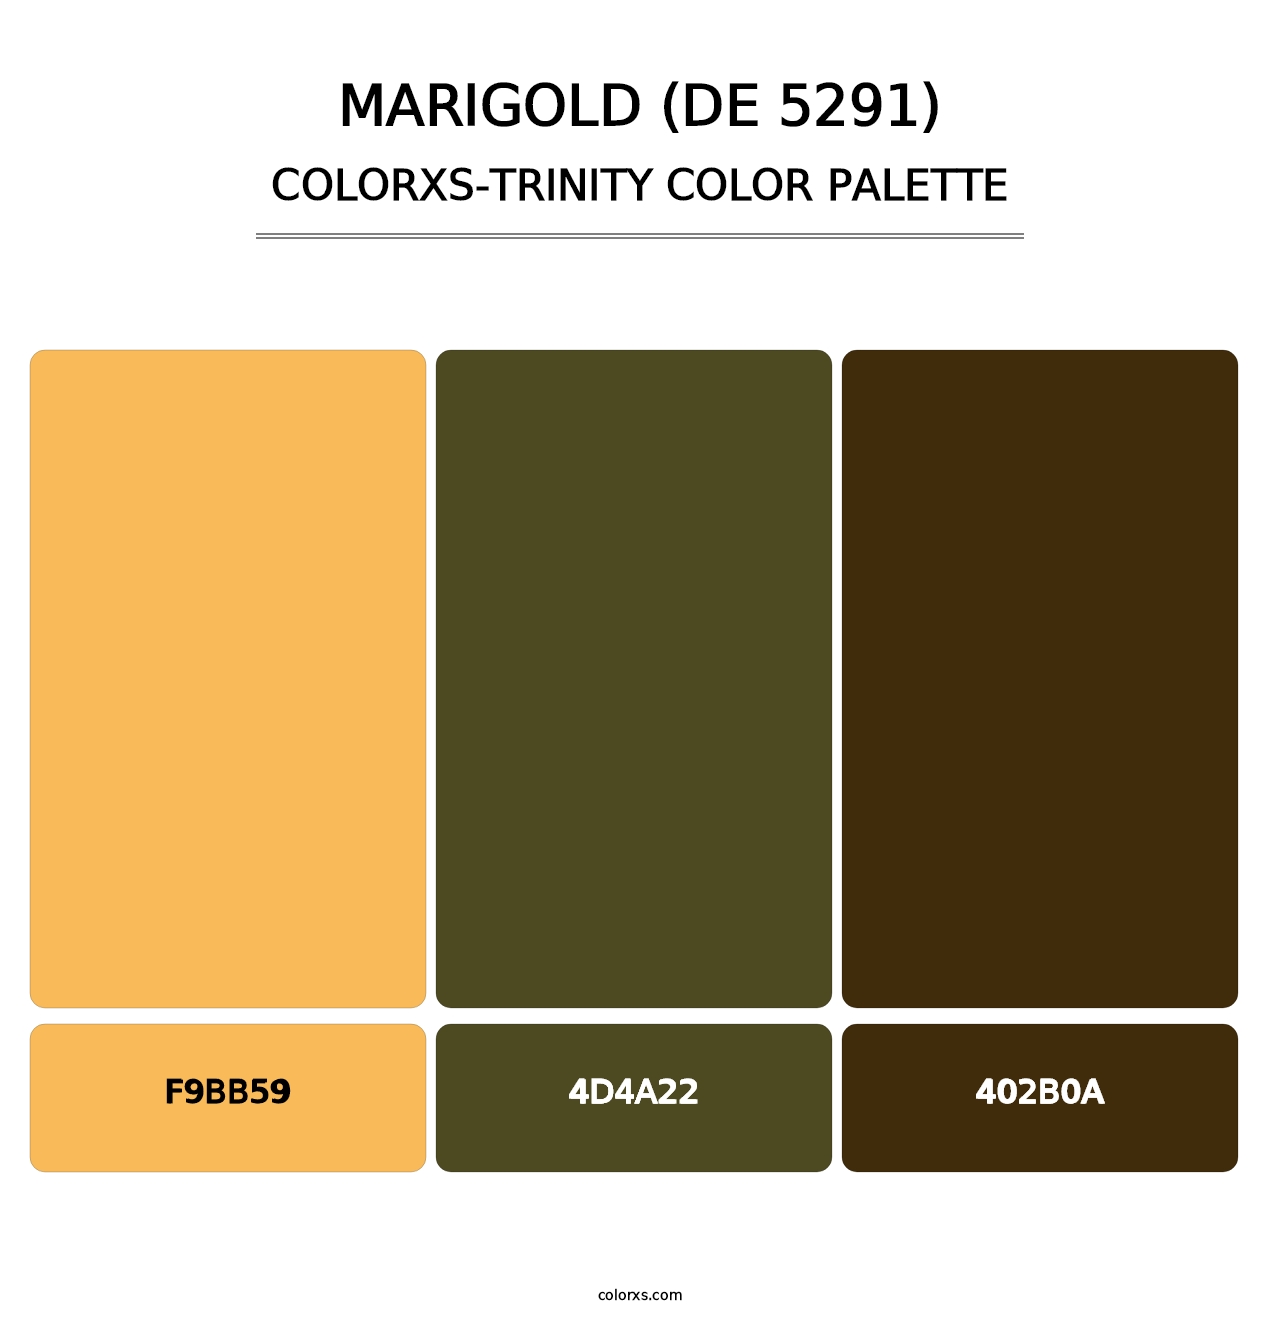 Marigold (DE 5291) - Colorxs Trinity Palette